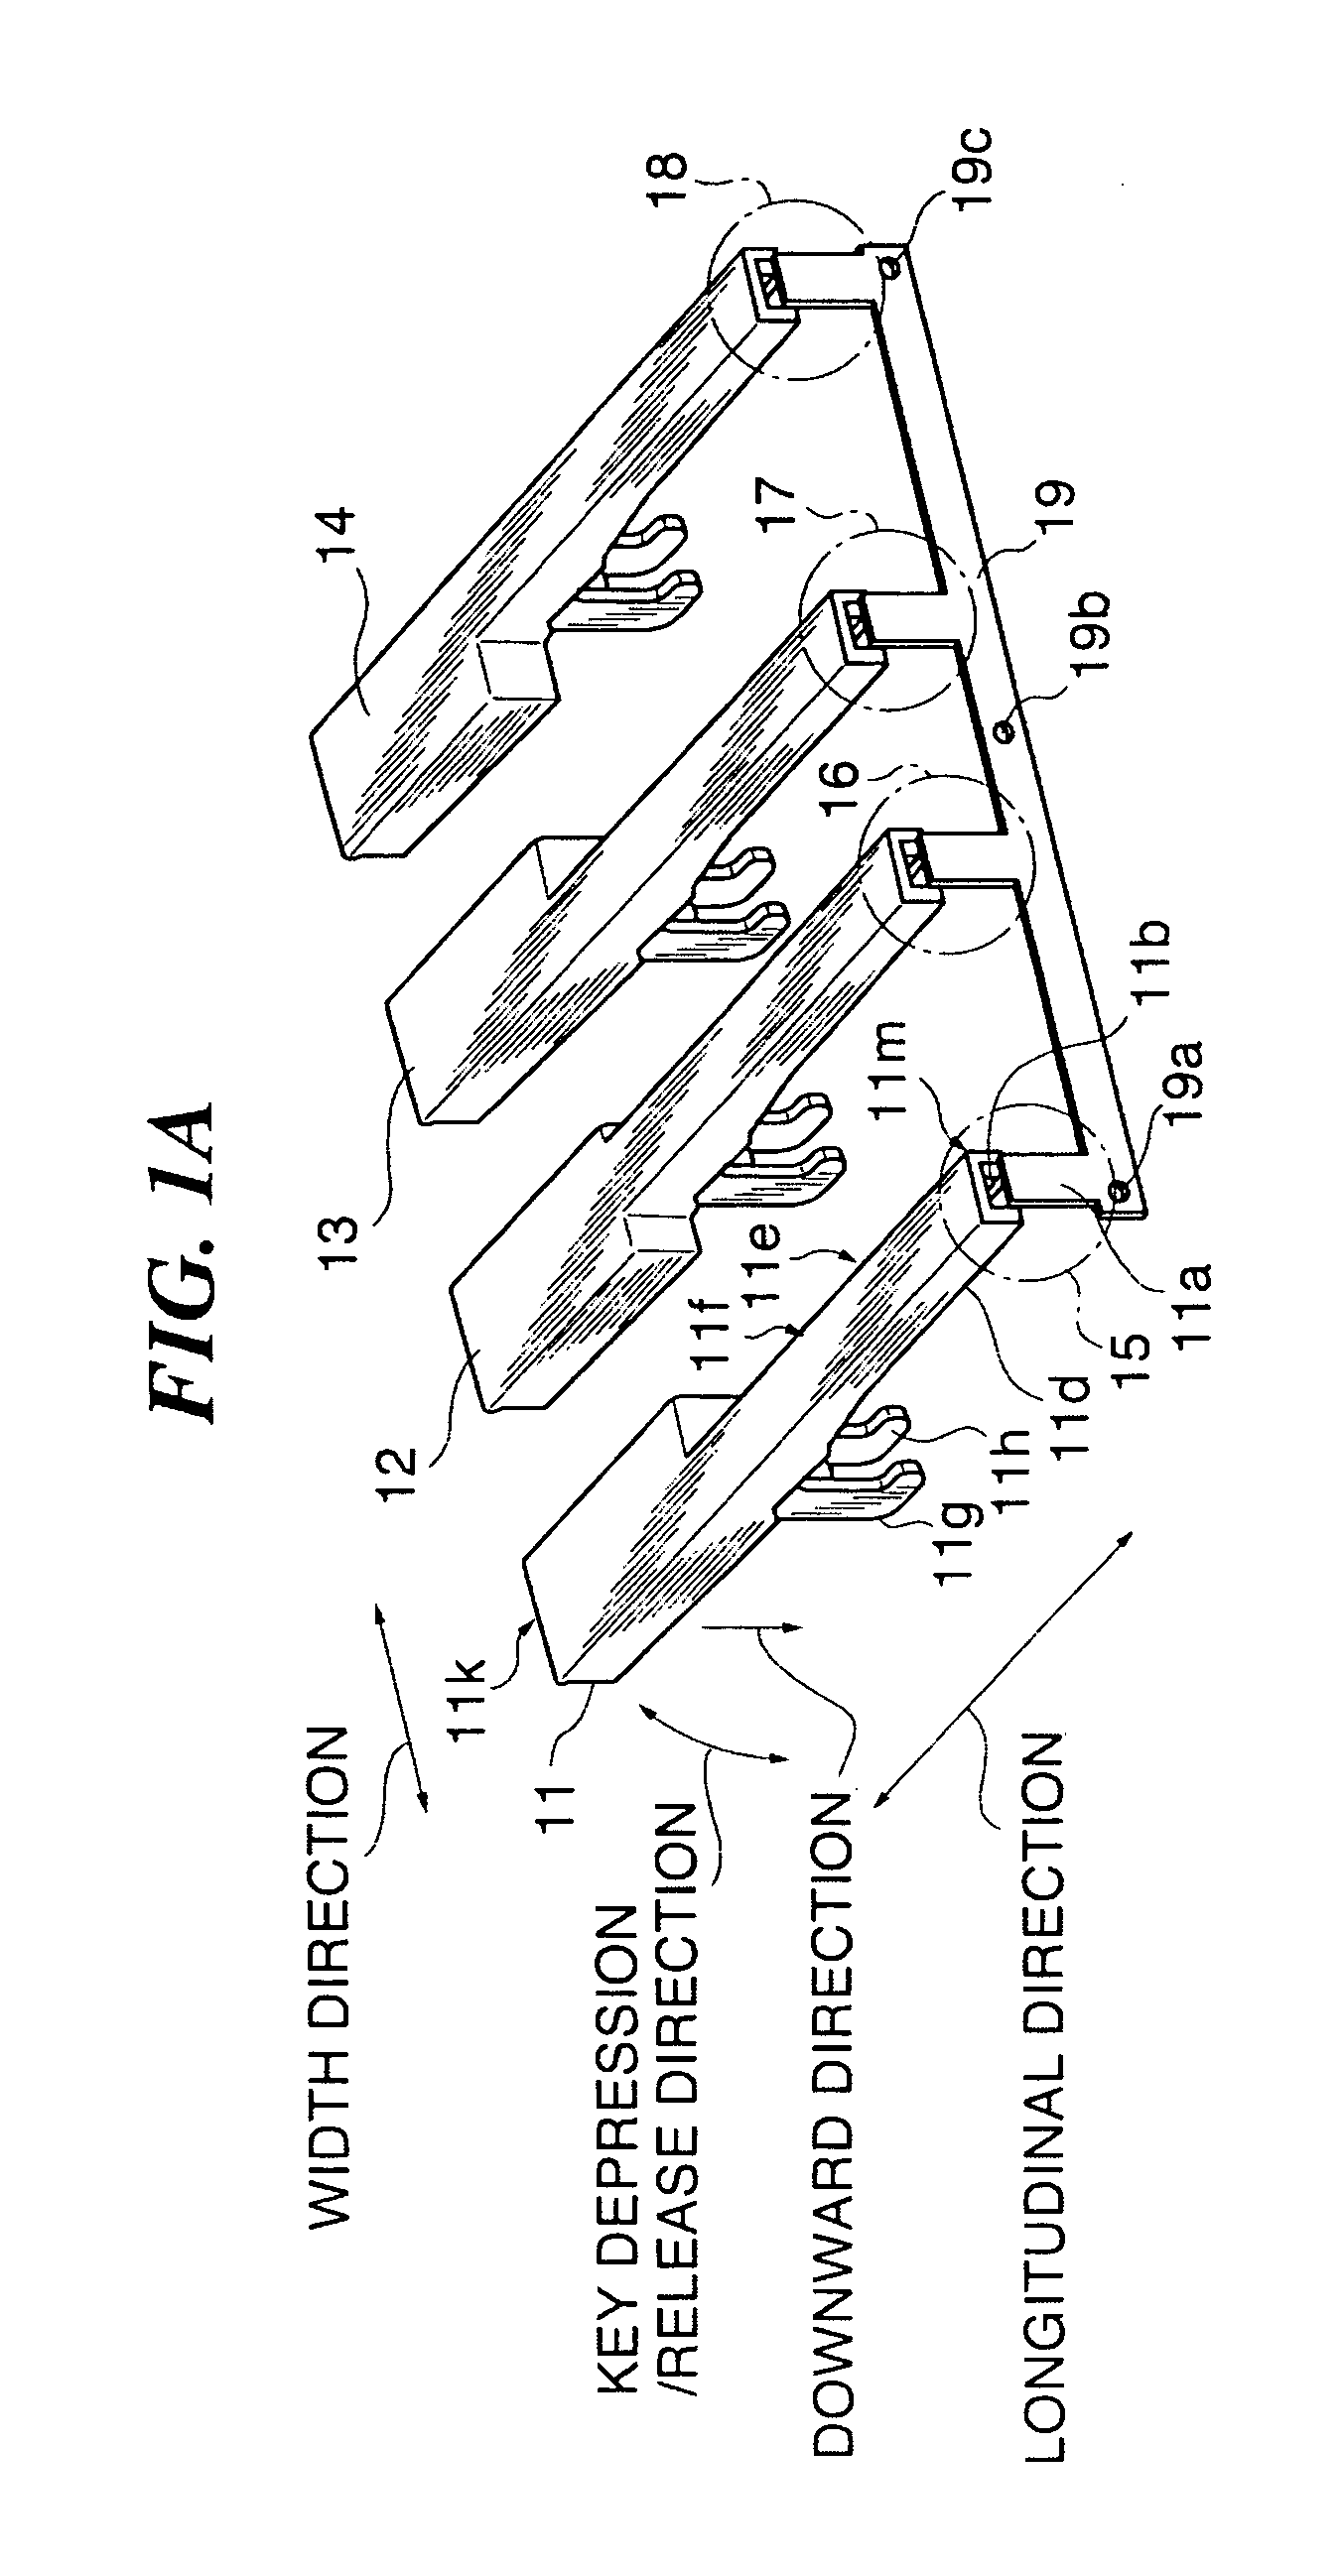 Keyboard apparatus of electronic keyboard instrument